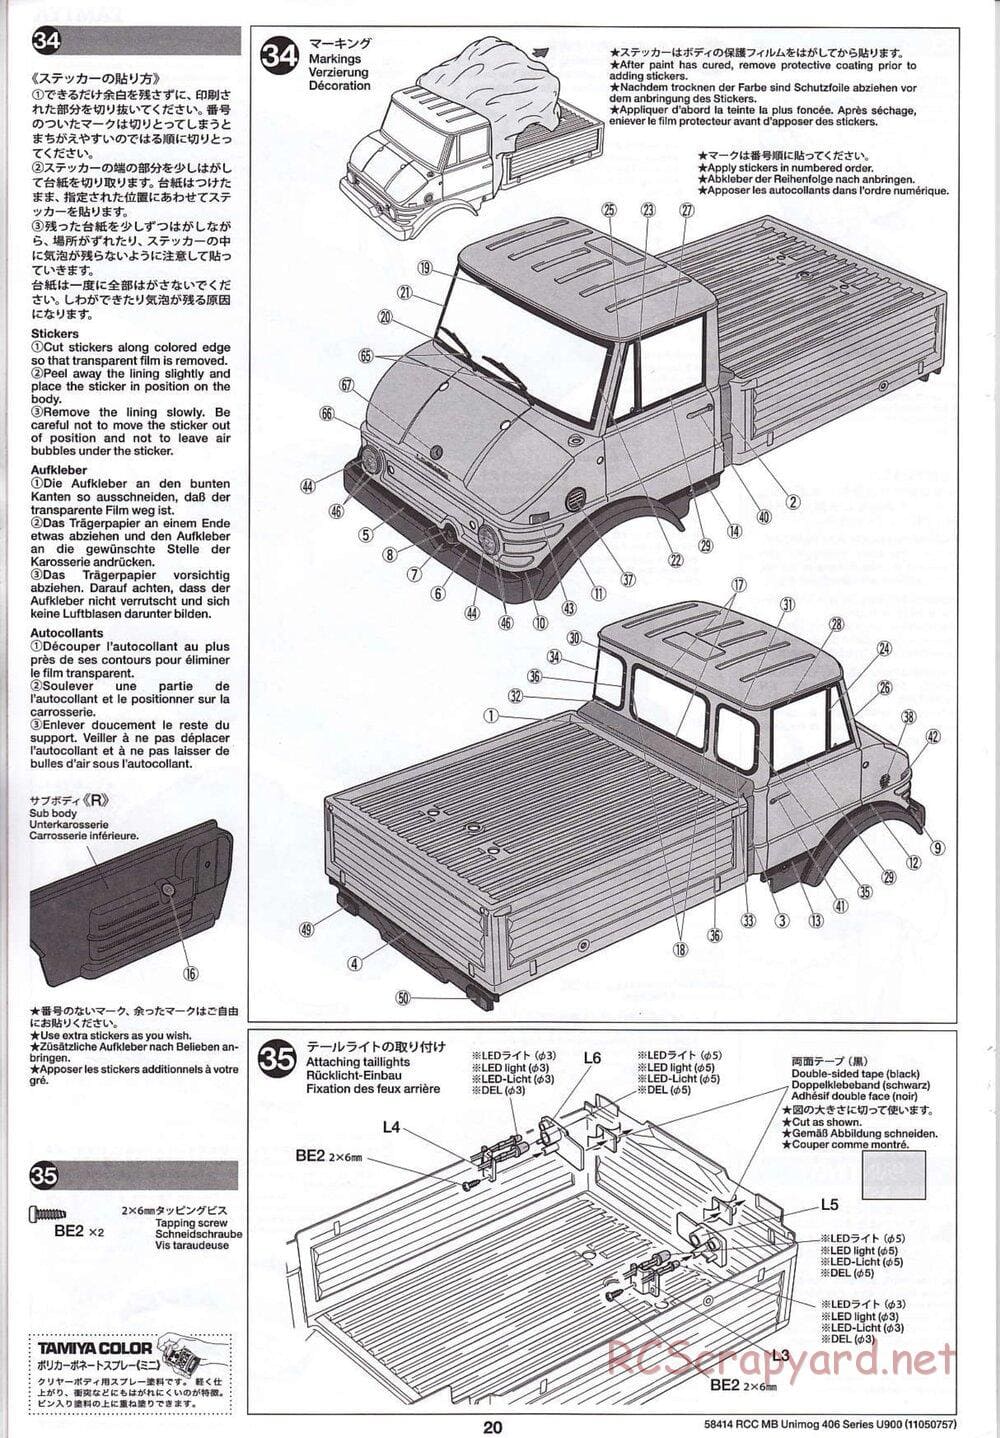 Tamiya - Mercedes-Benz Unimog 406 Series U900 - CR-01 Chassis - Manual - Page 20